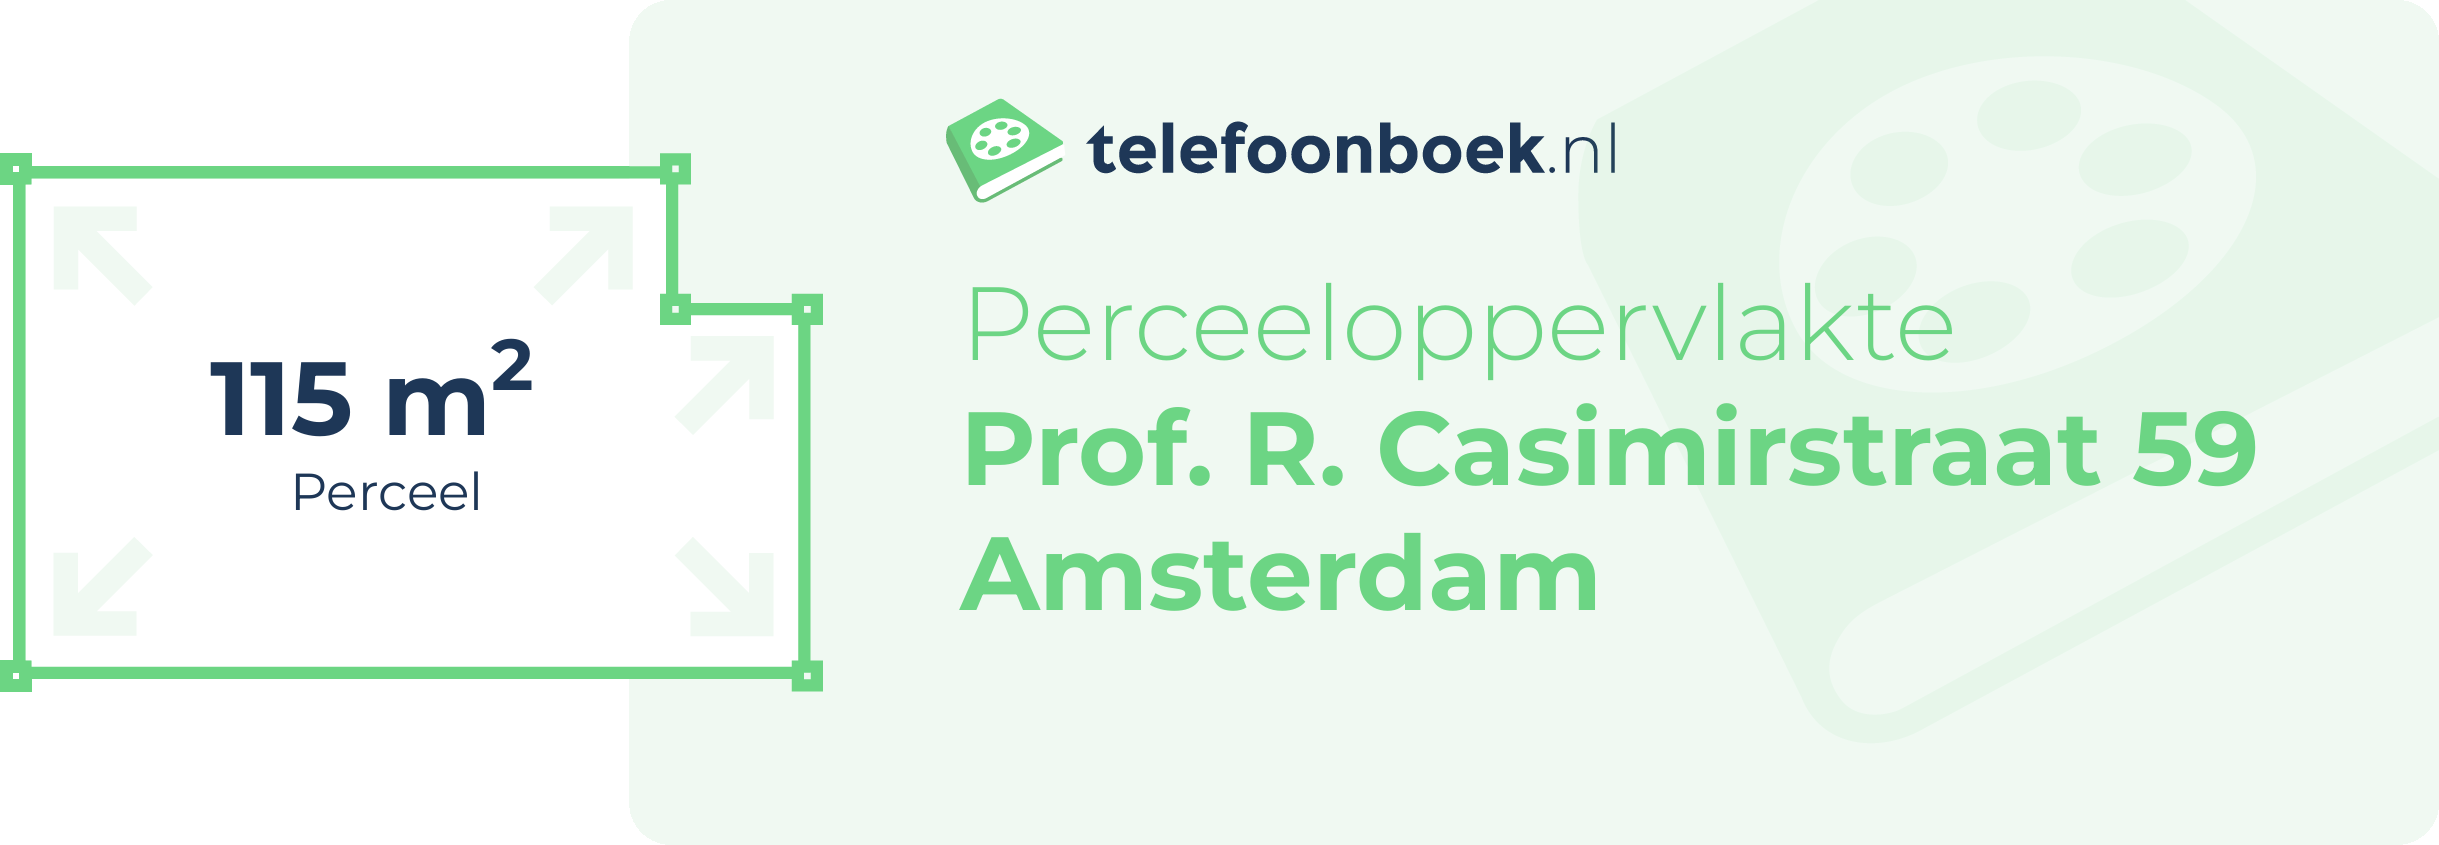 Perceeloppervlakte Prof. R. Casimirstraat 59 Amsterdam